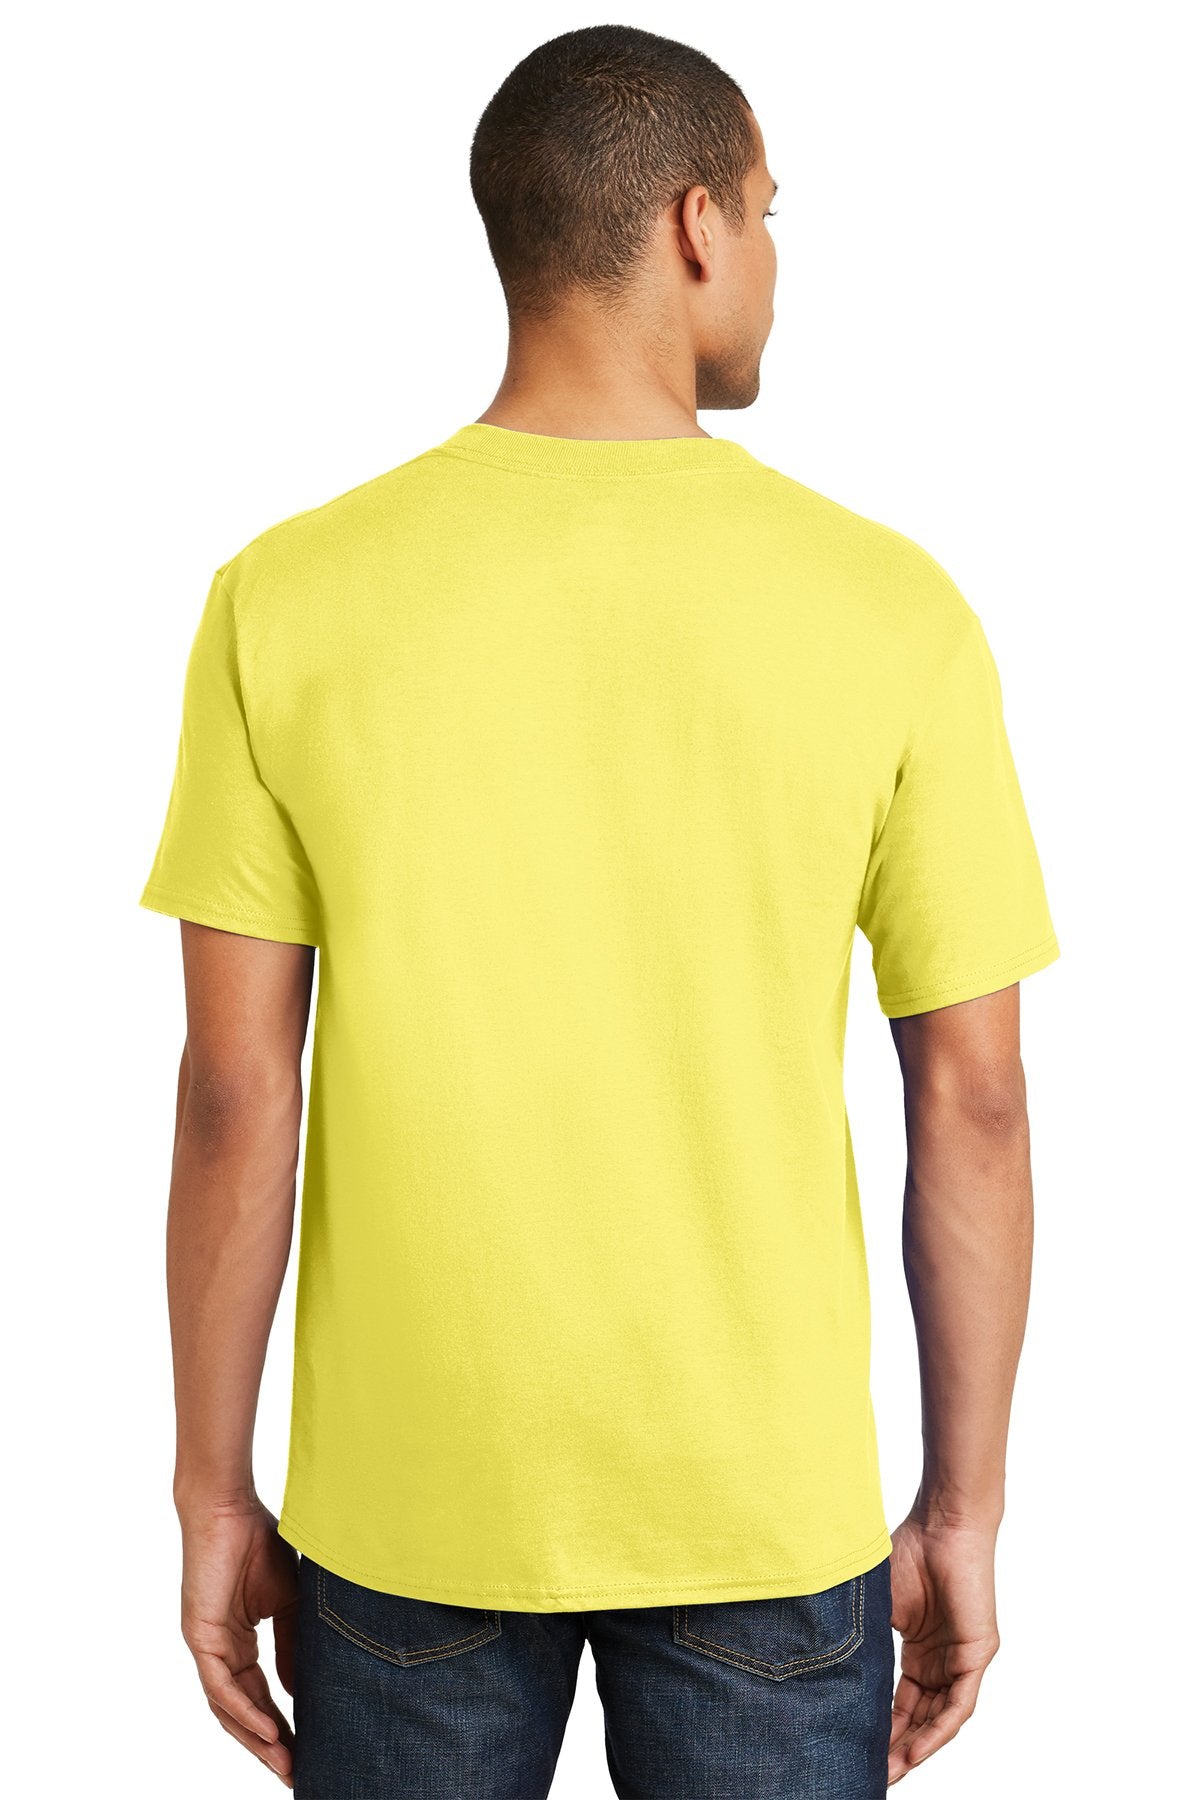 hanes beefy cotton t shirt 5180 yellow